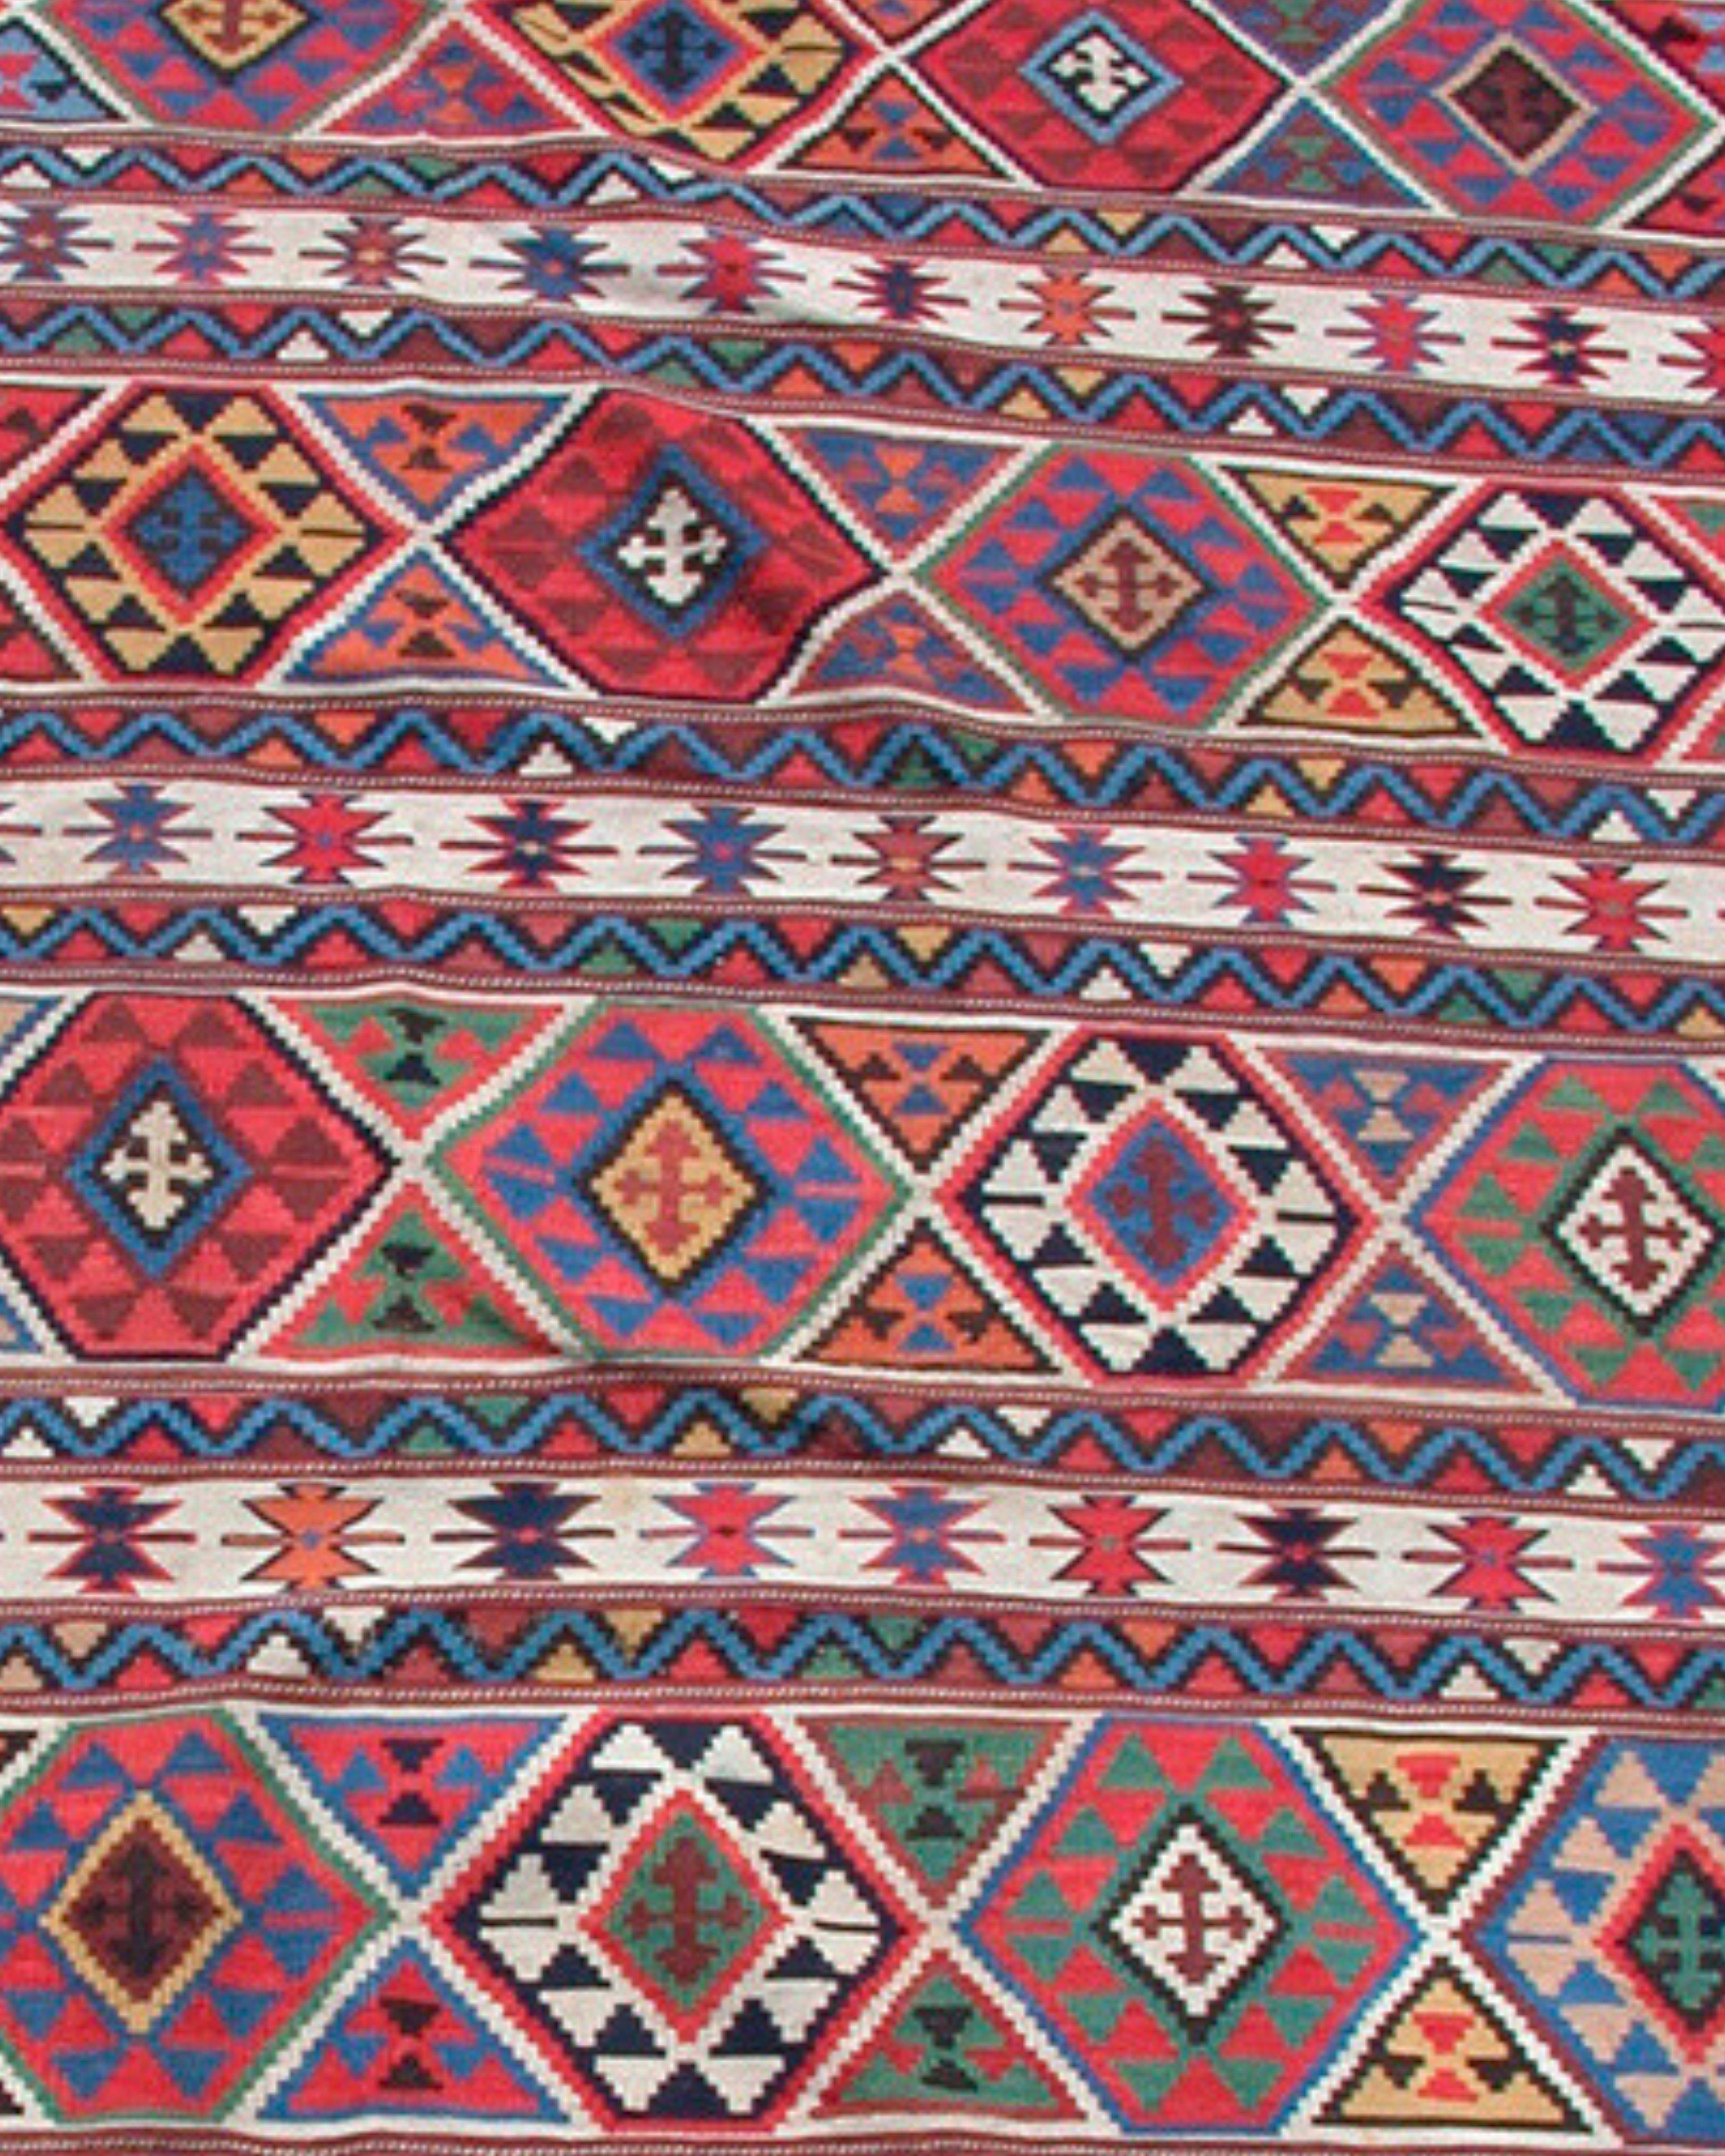 Antique Caucasian Shirvan Kilim Rug, 19th Century

Additional Information:
Dimensions: 5'10